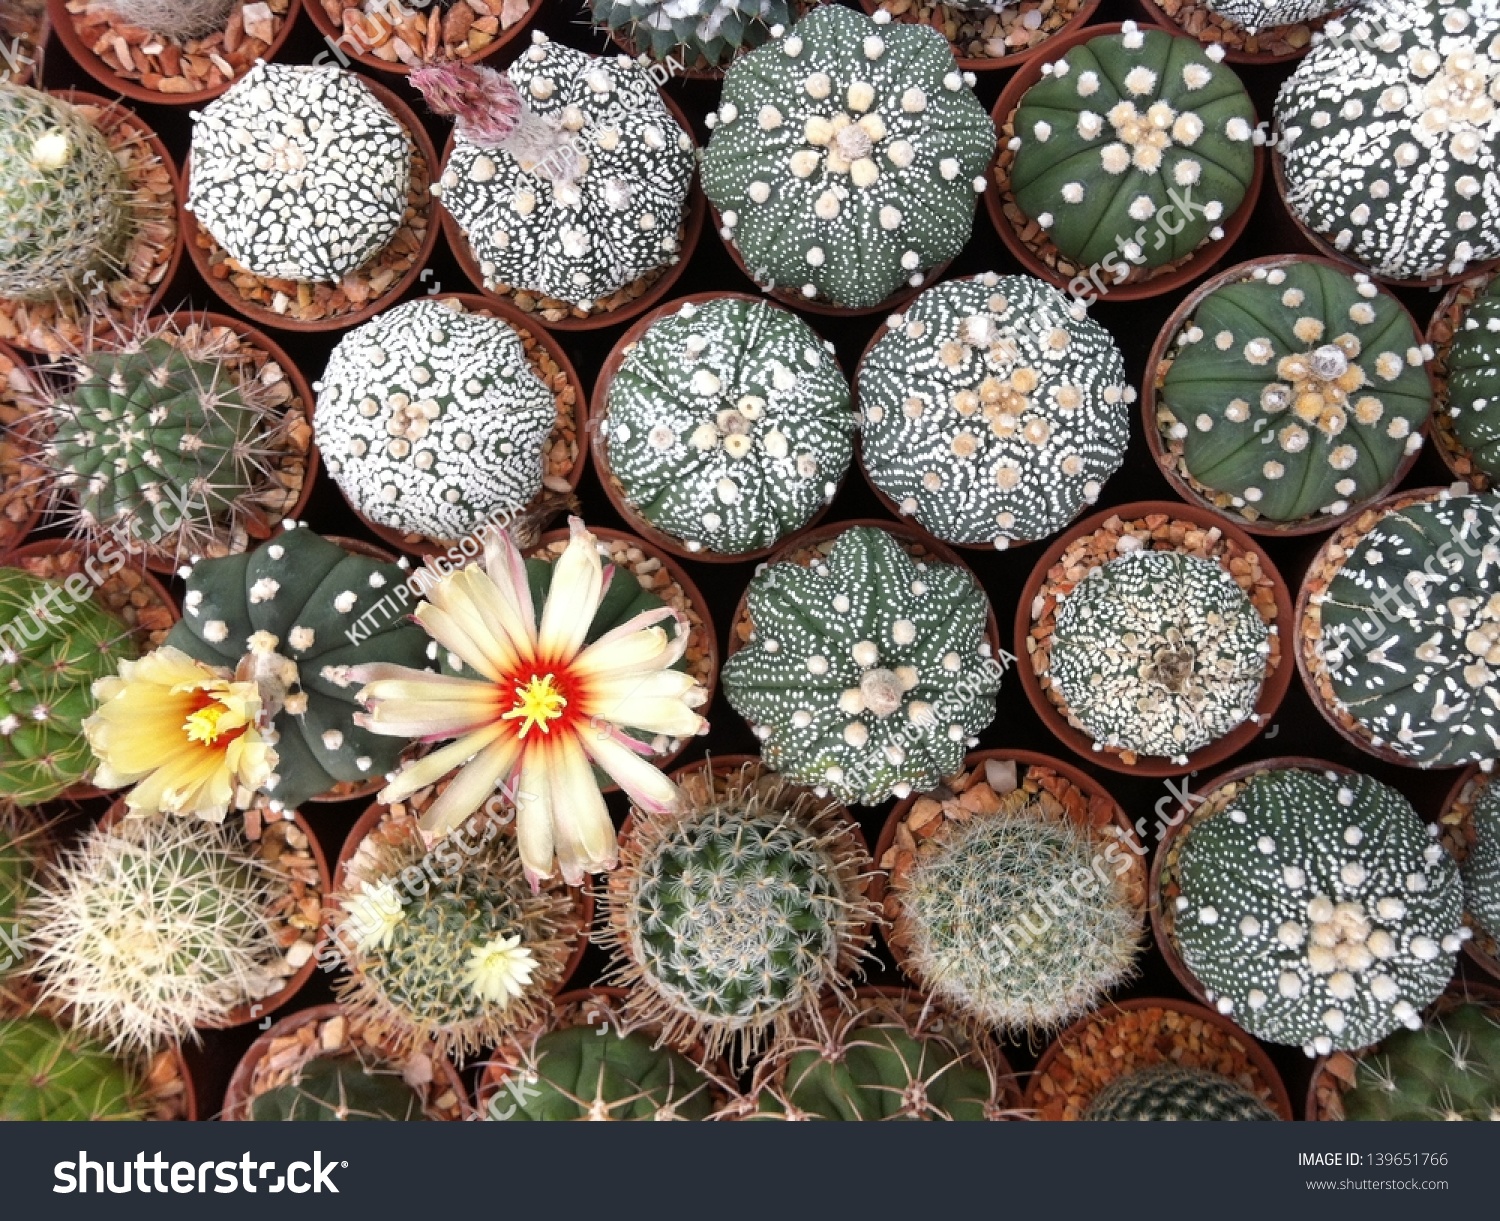 Astrophytum asterias sand dollar cactus stock photo